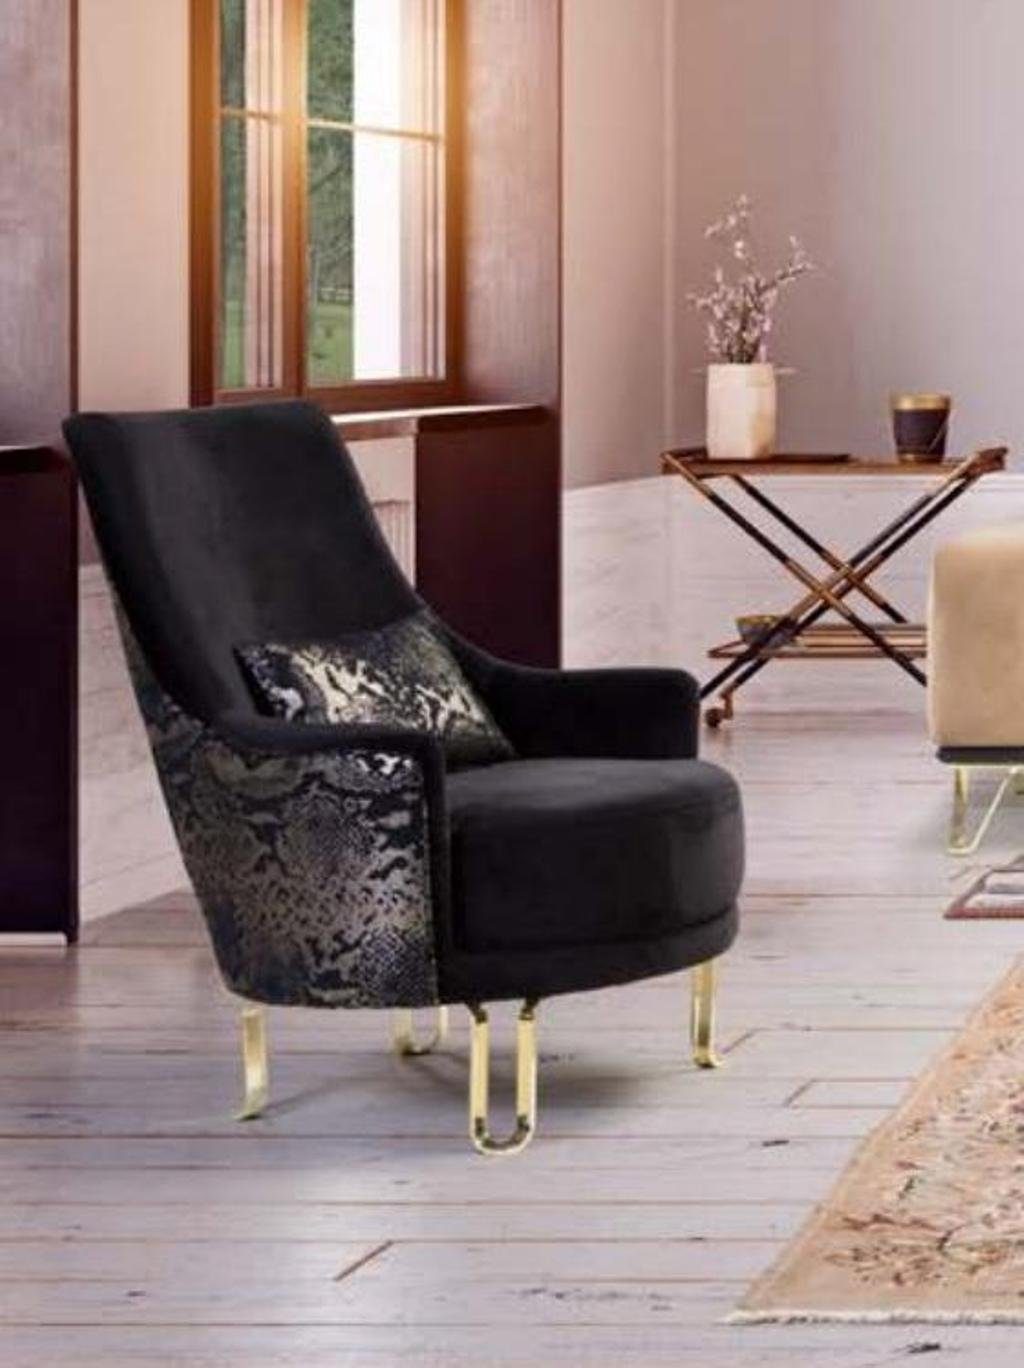 3+3+1 Europe in Möbel JVmoebel Sofa Design, Made Sessel Schwarz Elegantes Sofa Sitzer Sofagarnitur